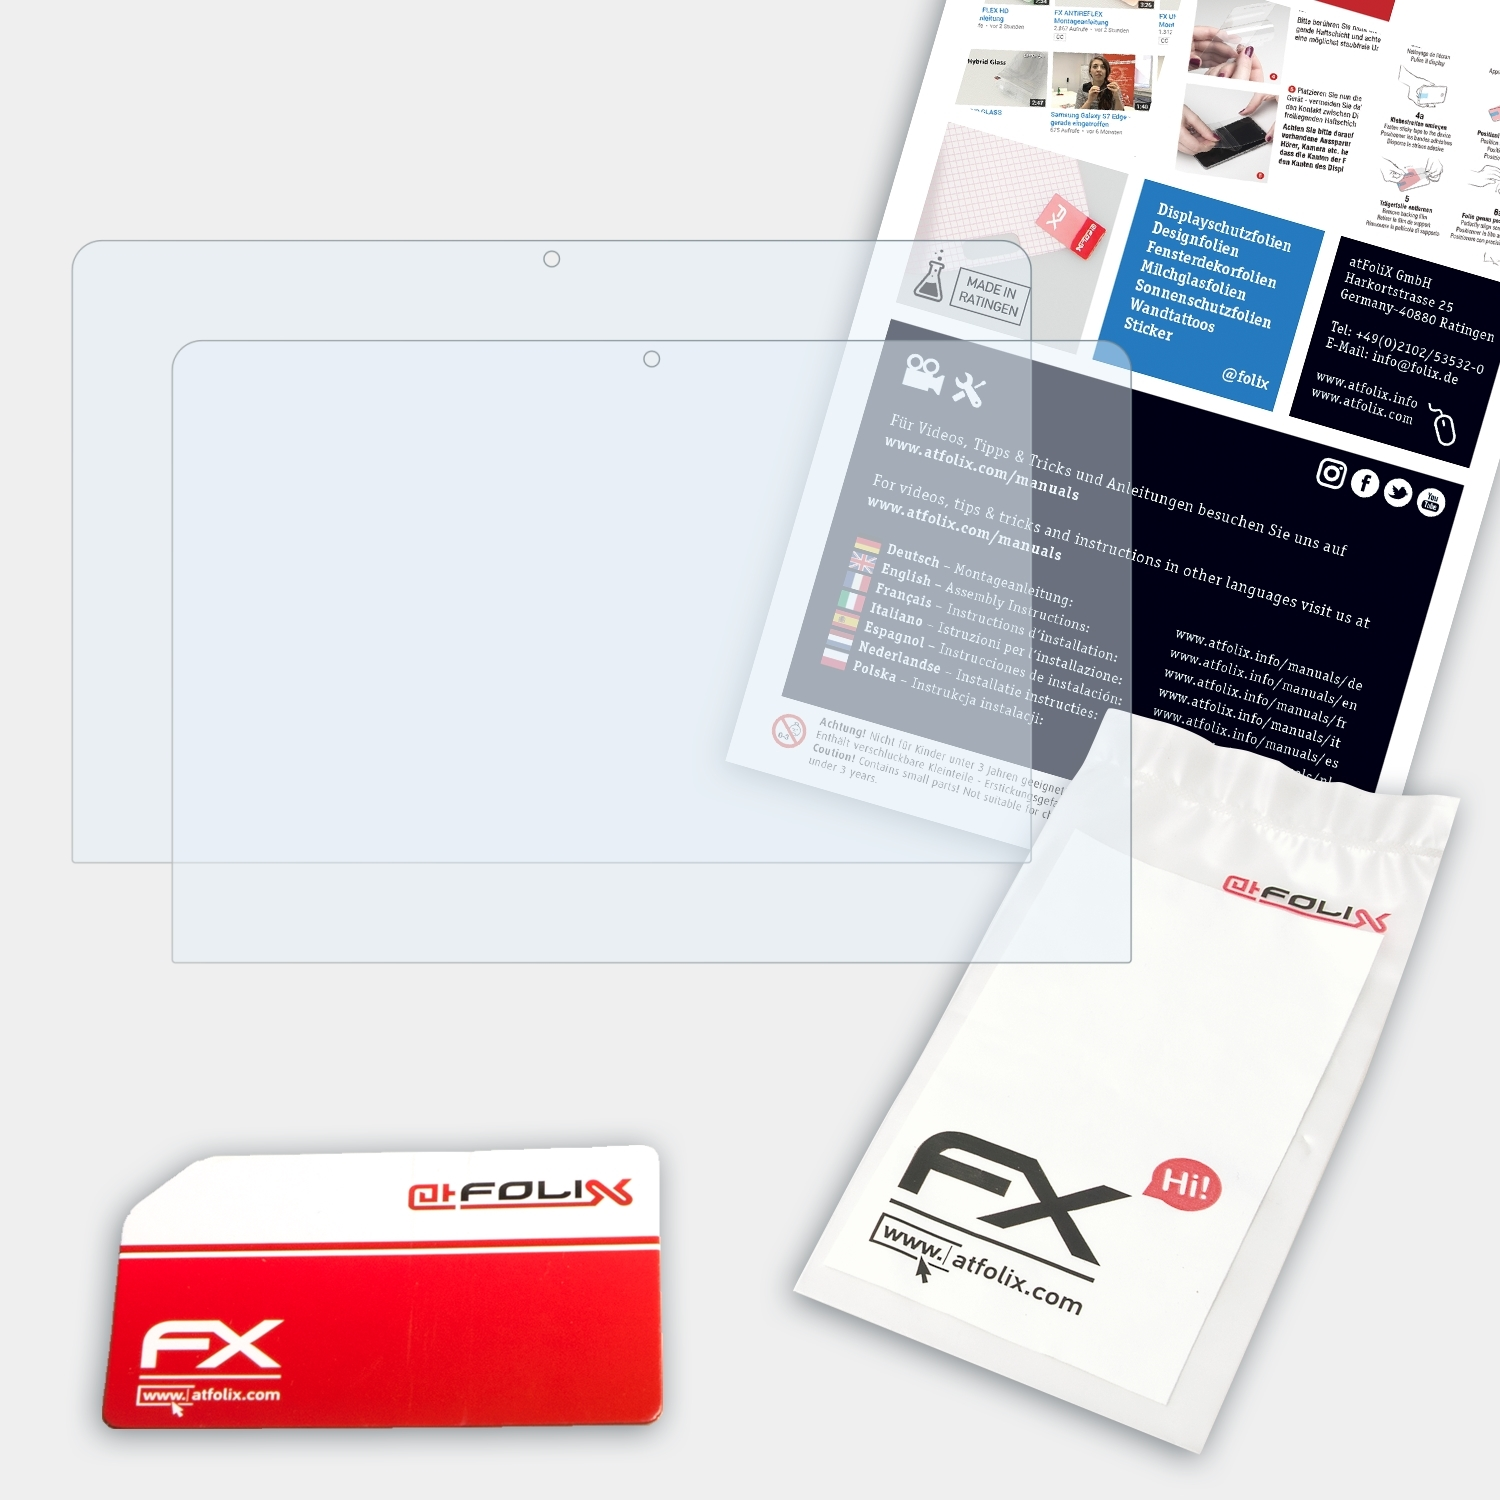 2x Yoga 6)) 11e (Gen FX-Clear Lenovo ATFOLIX ThinkPad Displayschutz(für